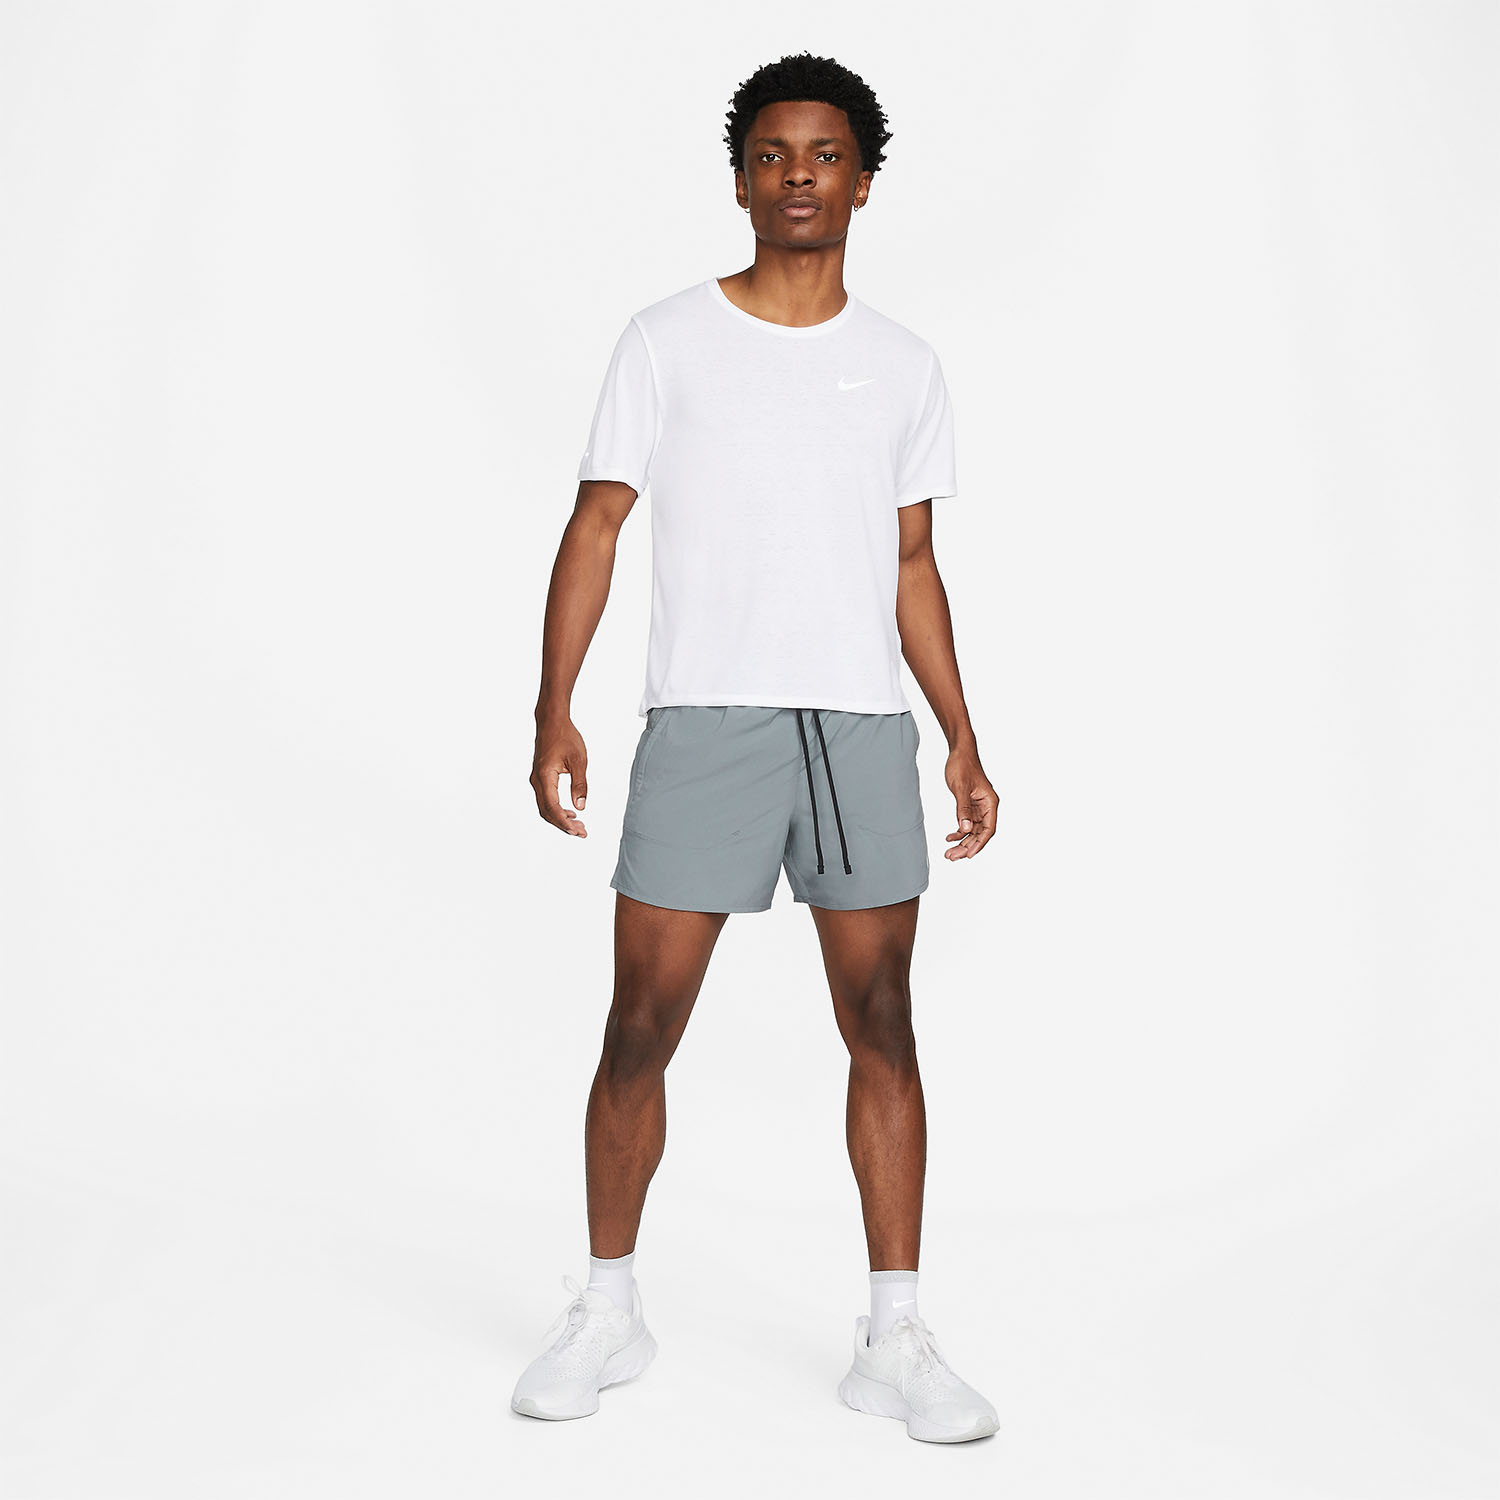 Nike Dri-FIT Stride 5in Shorts - Smoke Grey/Black/Reflective Silver